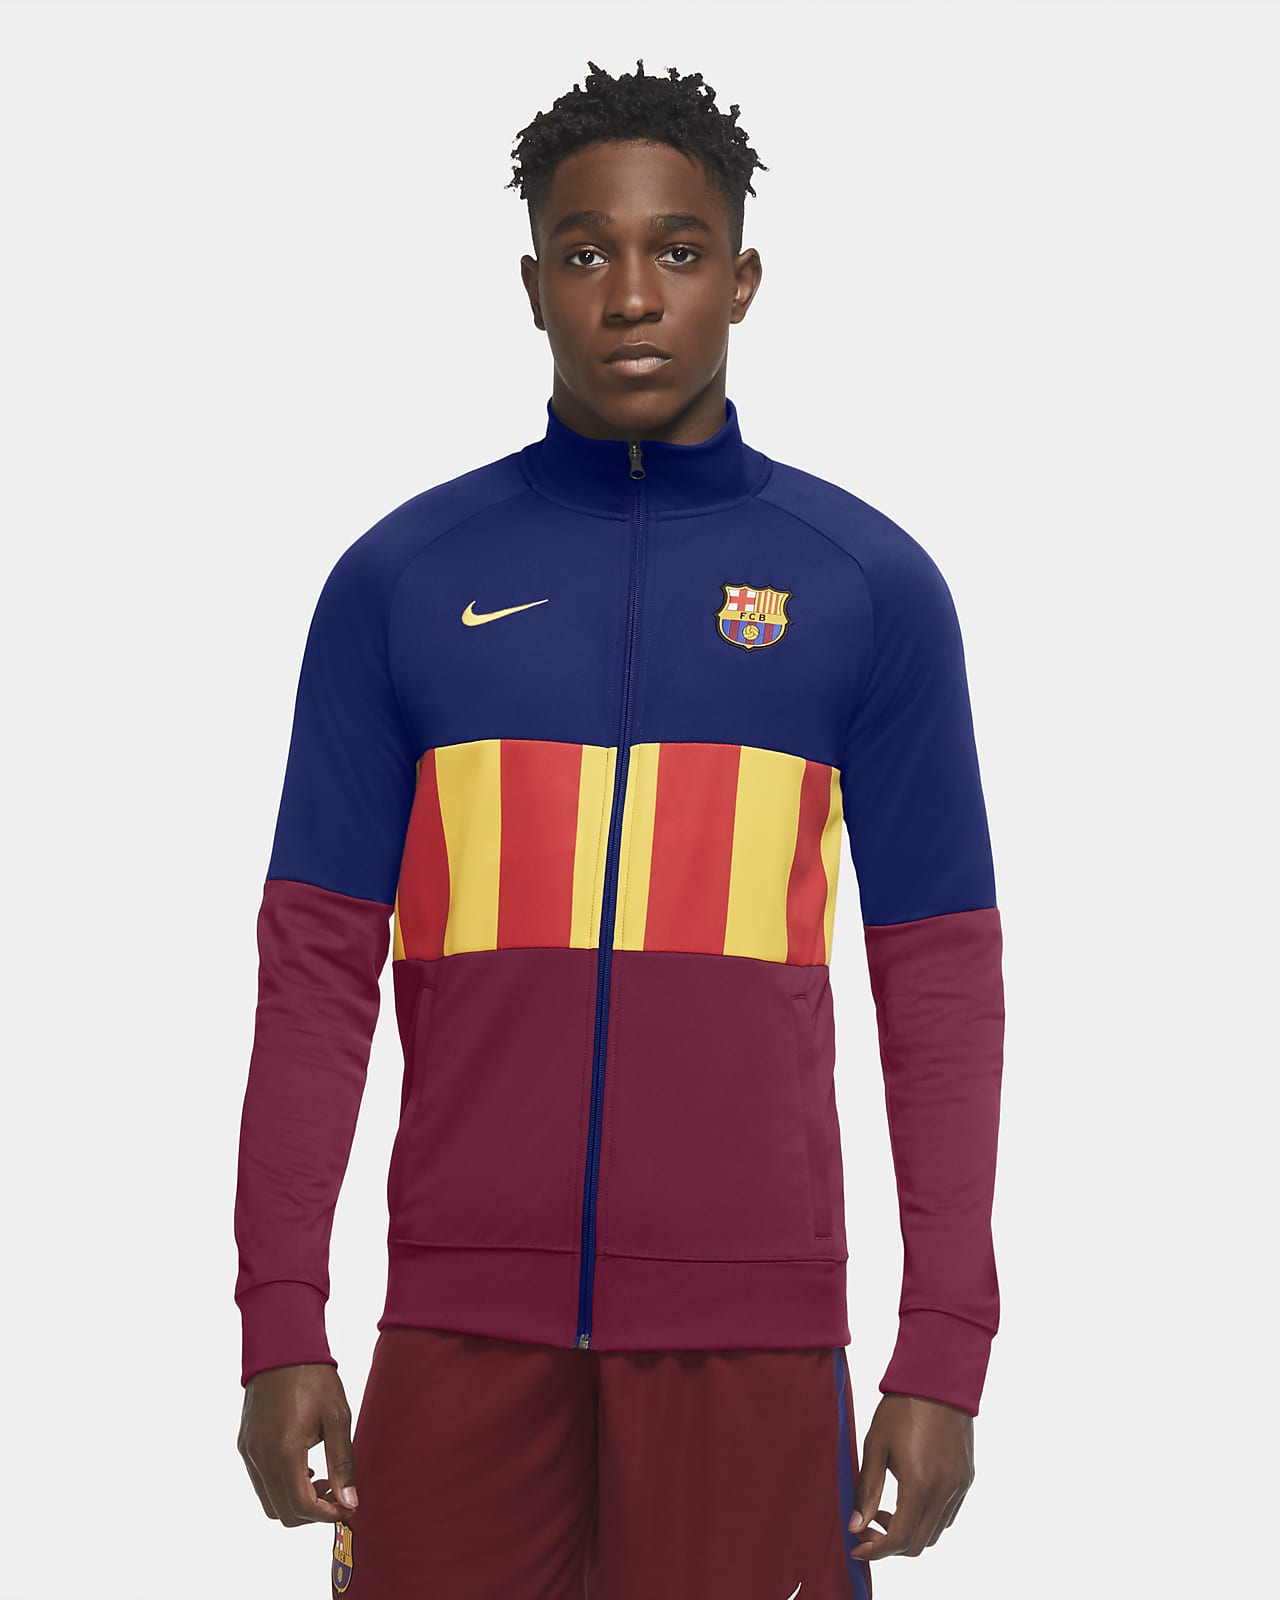 barcelona fc jacket nike